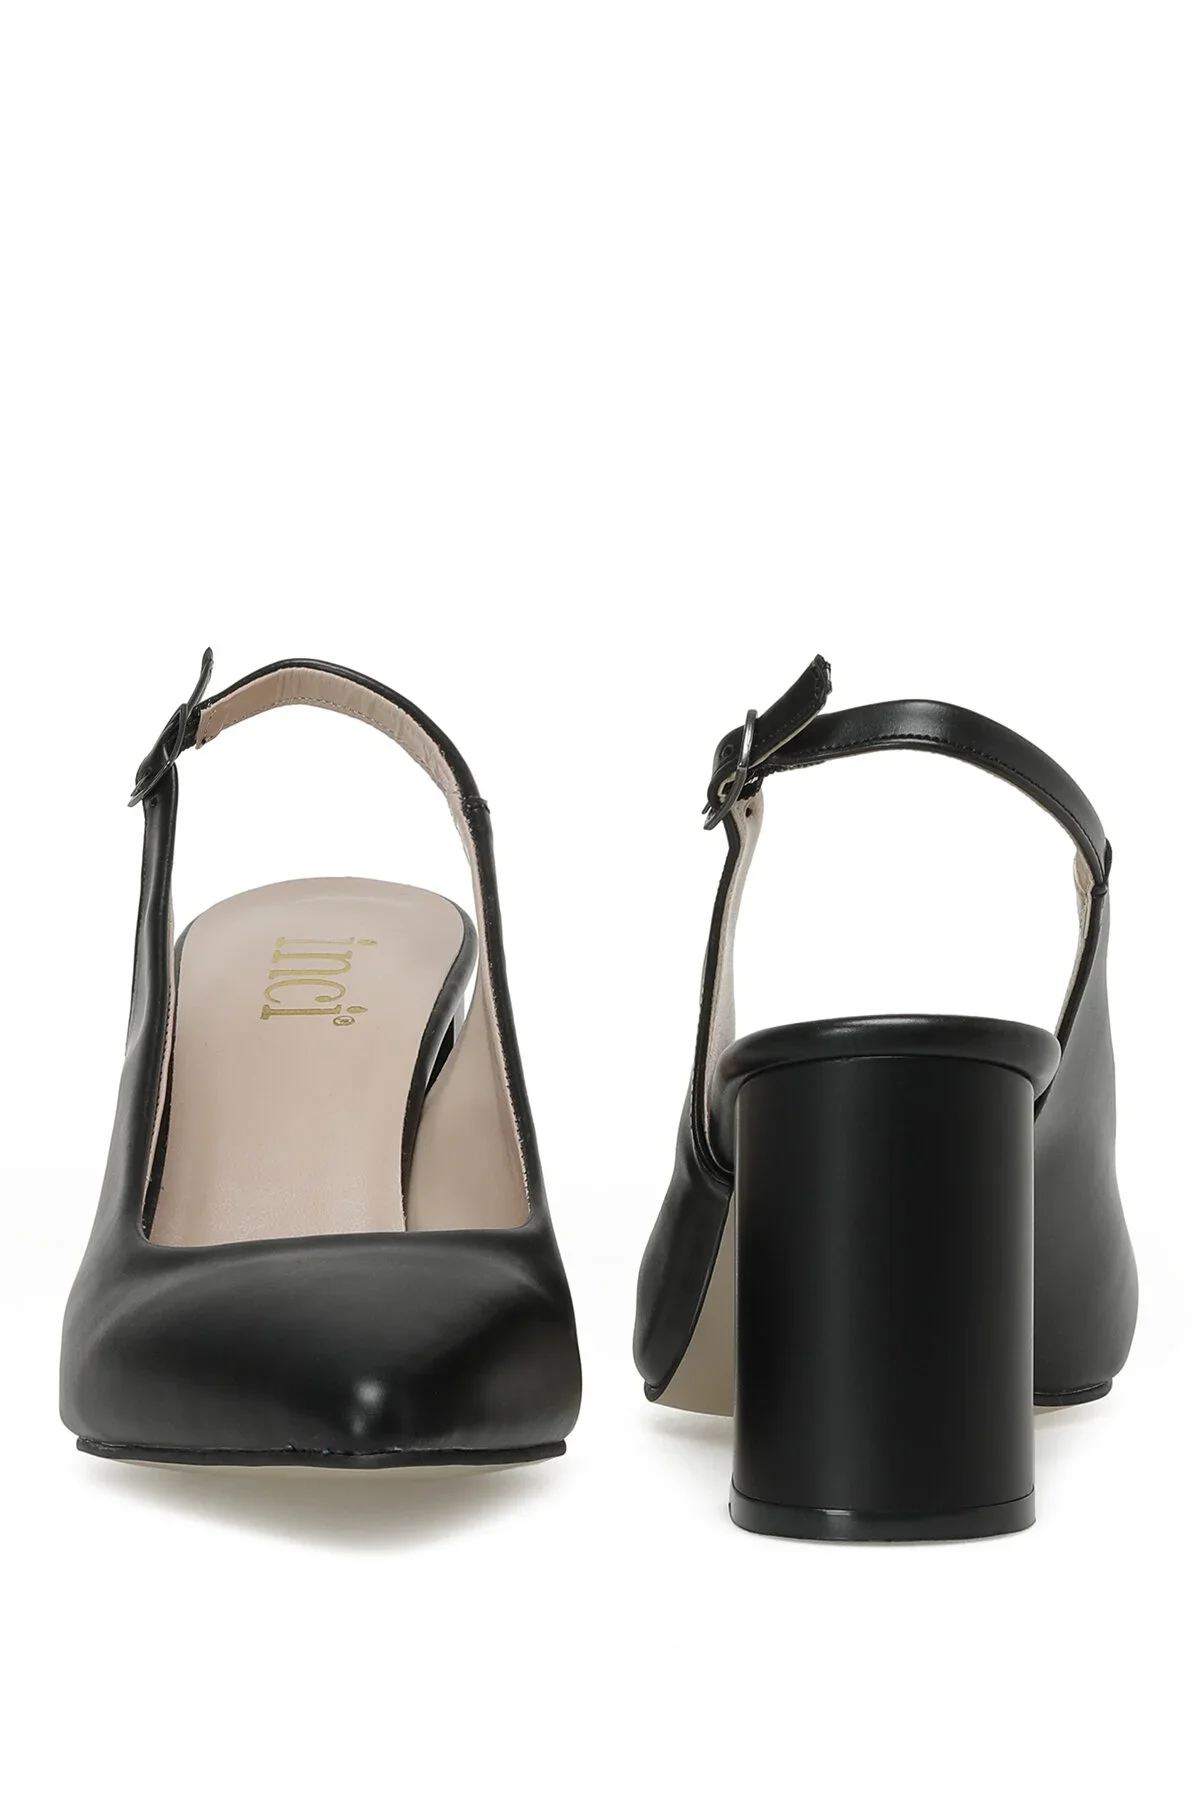 TESSA 3FX Kadın Topuklu Ayakkabı-Siyah - 5